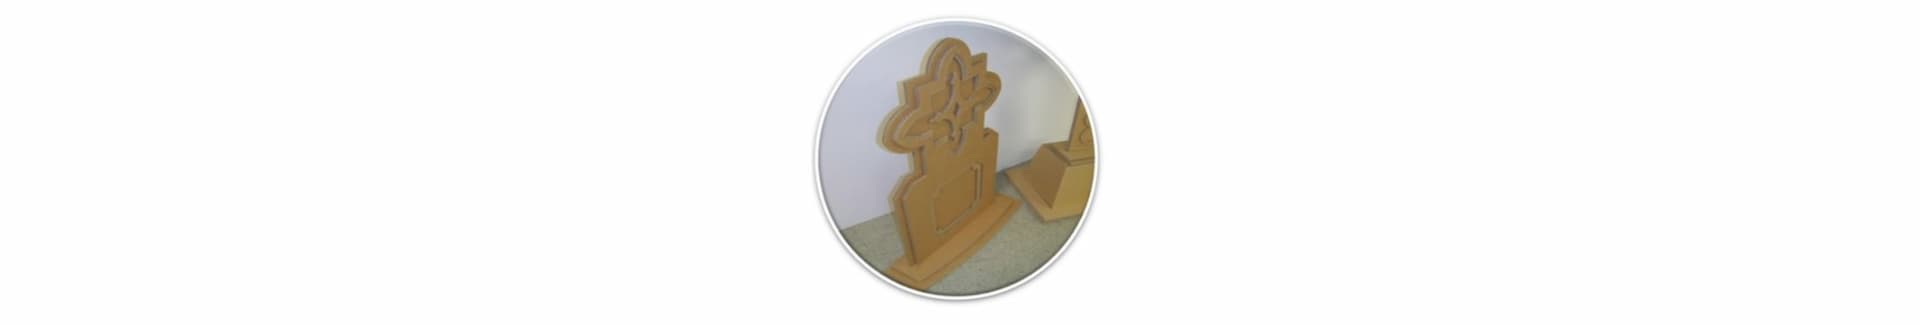 cardboard tombstone cutout